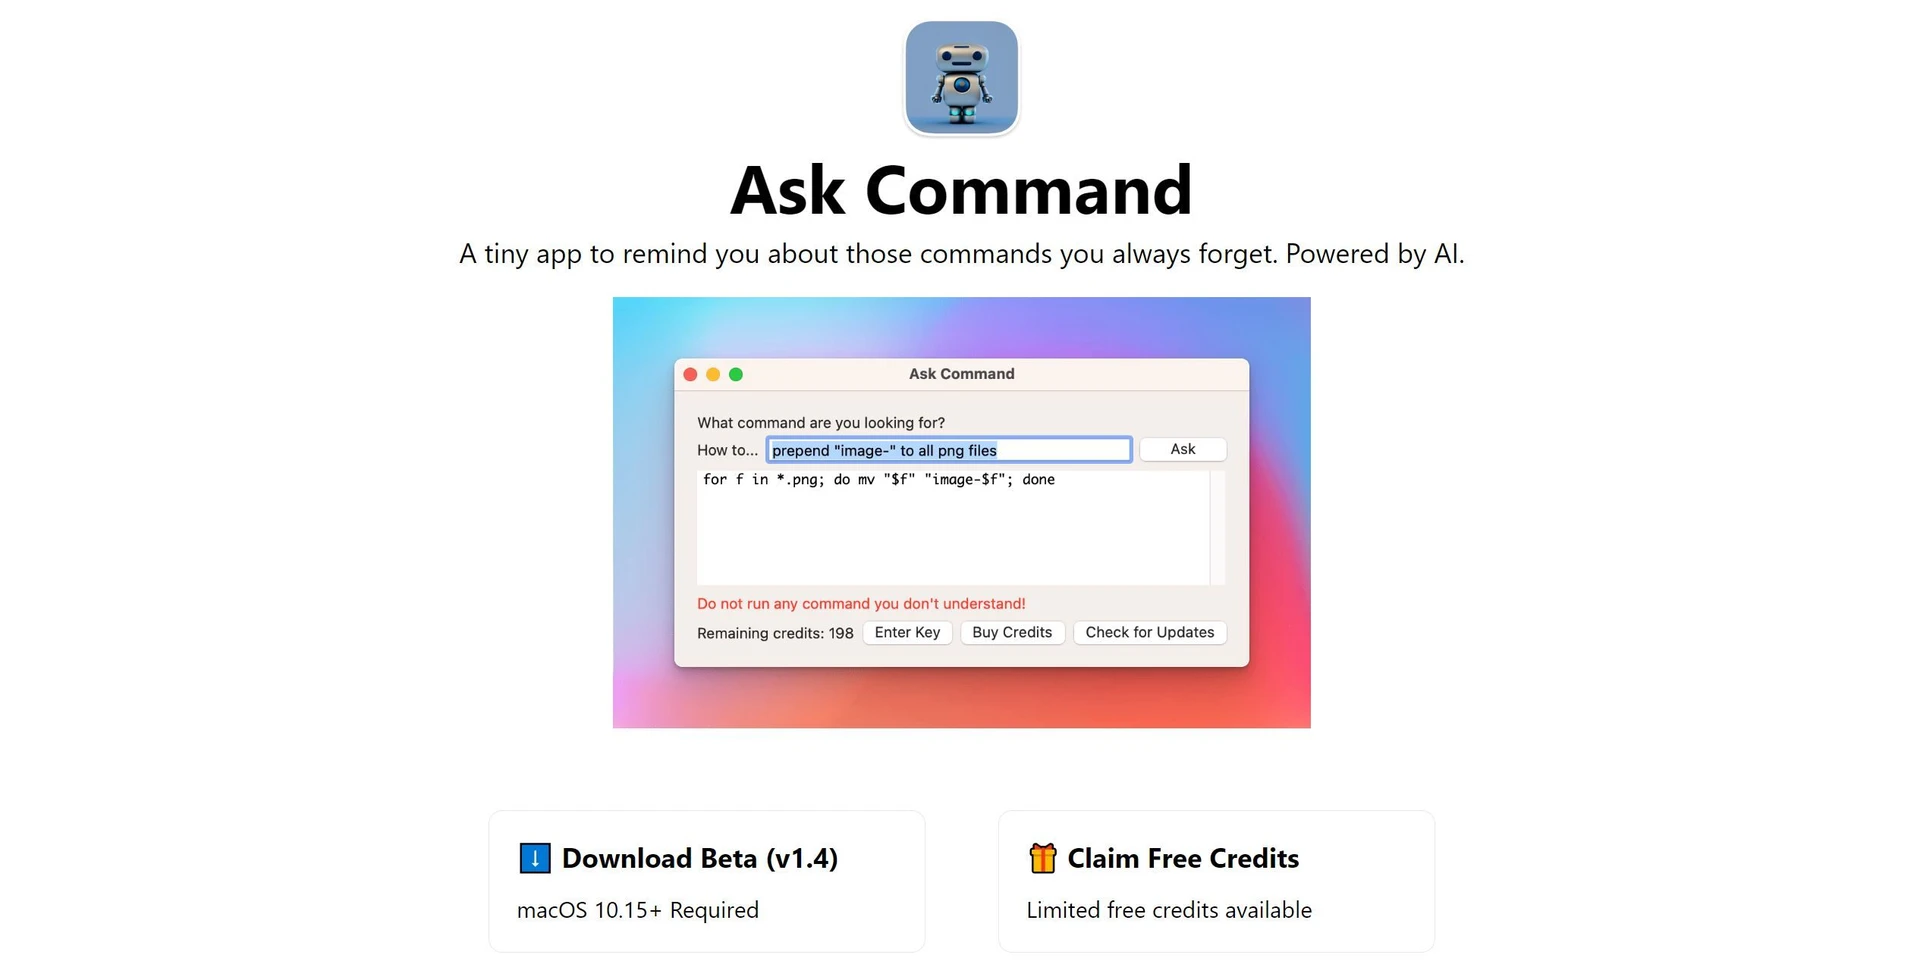 Ask Commandwebsite picture